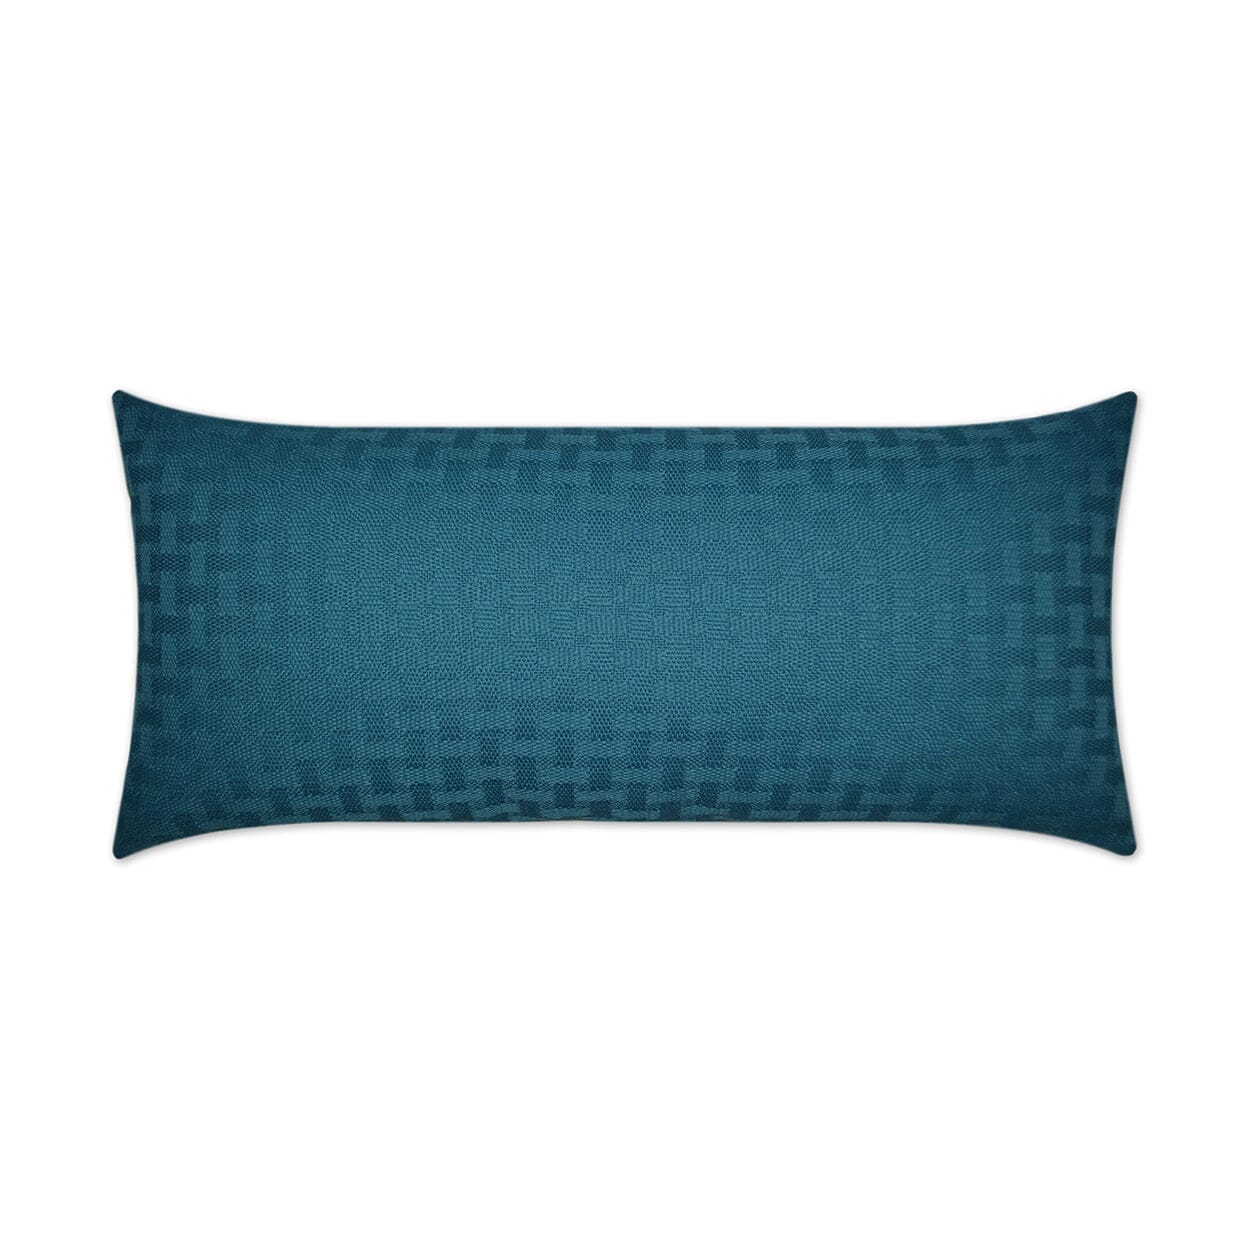 D.V. Kap 12" x 24" Outdoor Lumbar Pillow | Carmel Weave Turquoise Pillows D.V Kap Outdoor